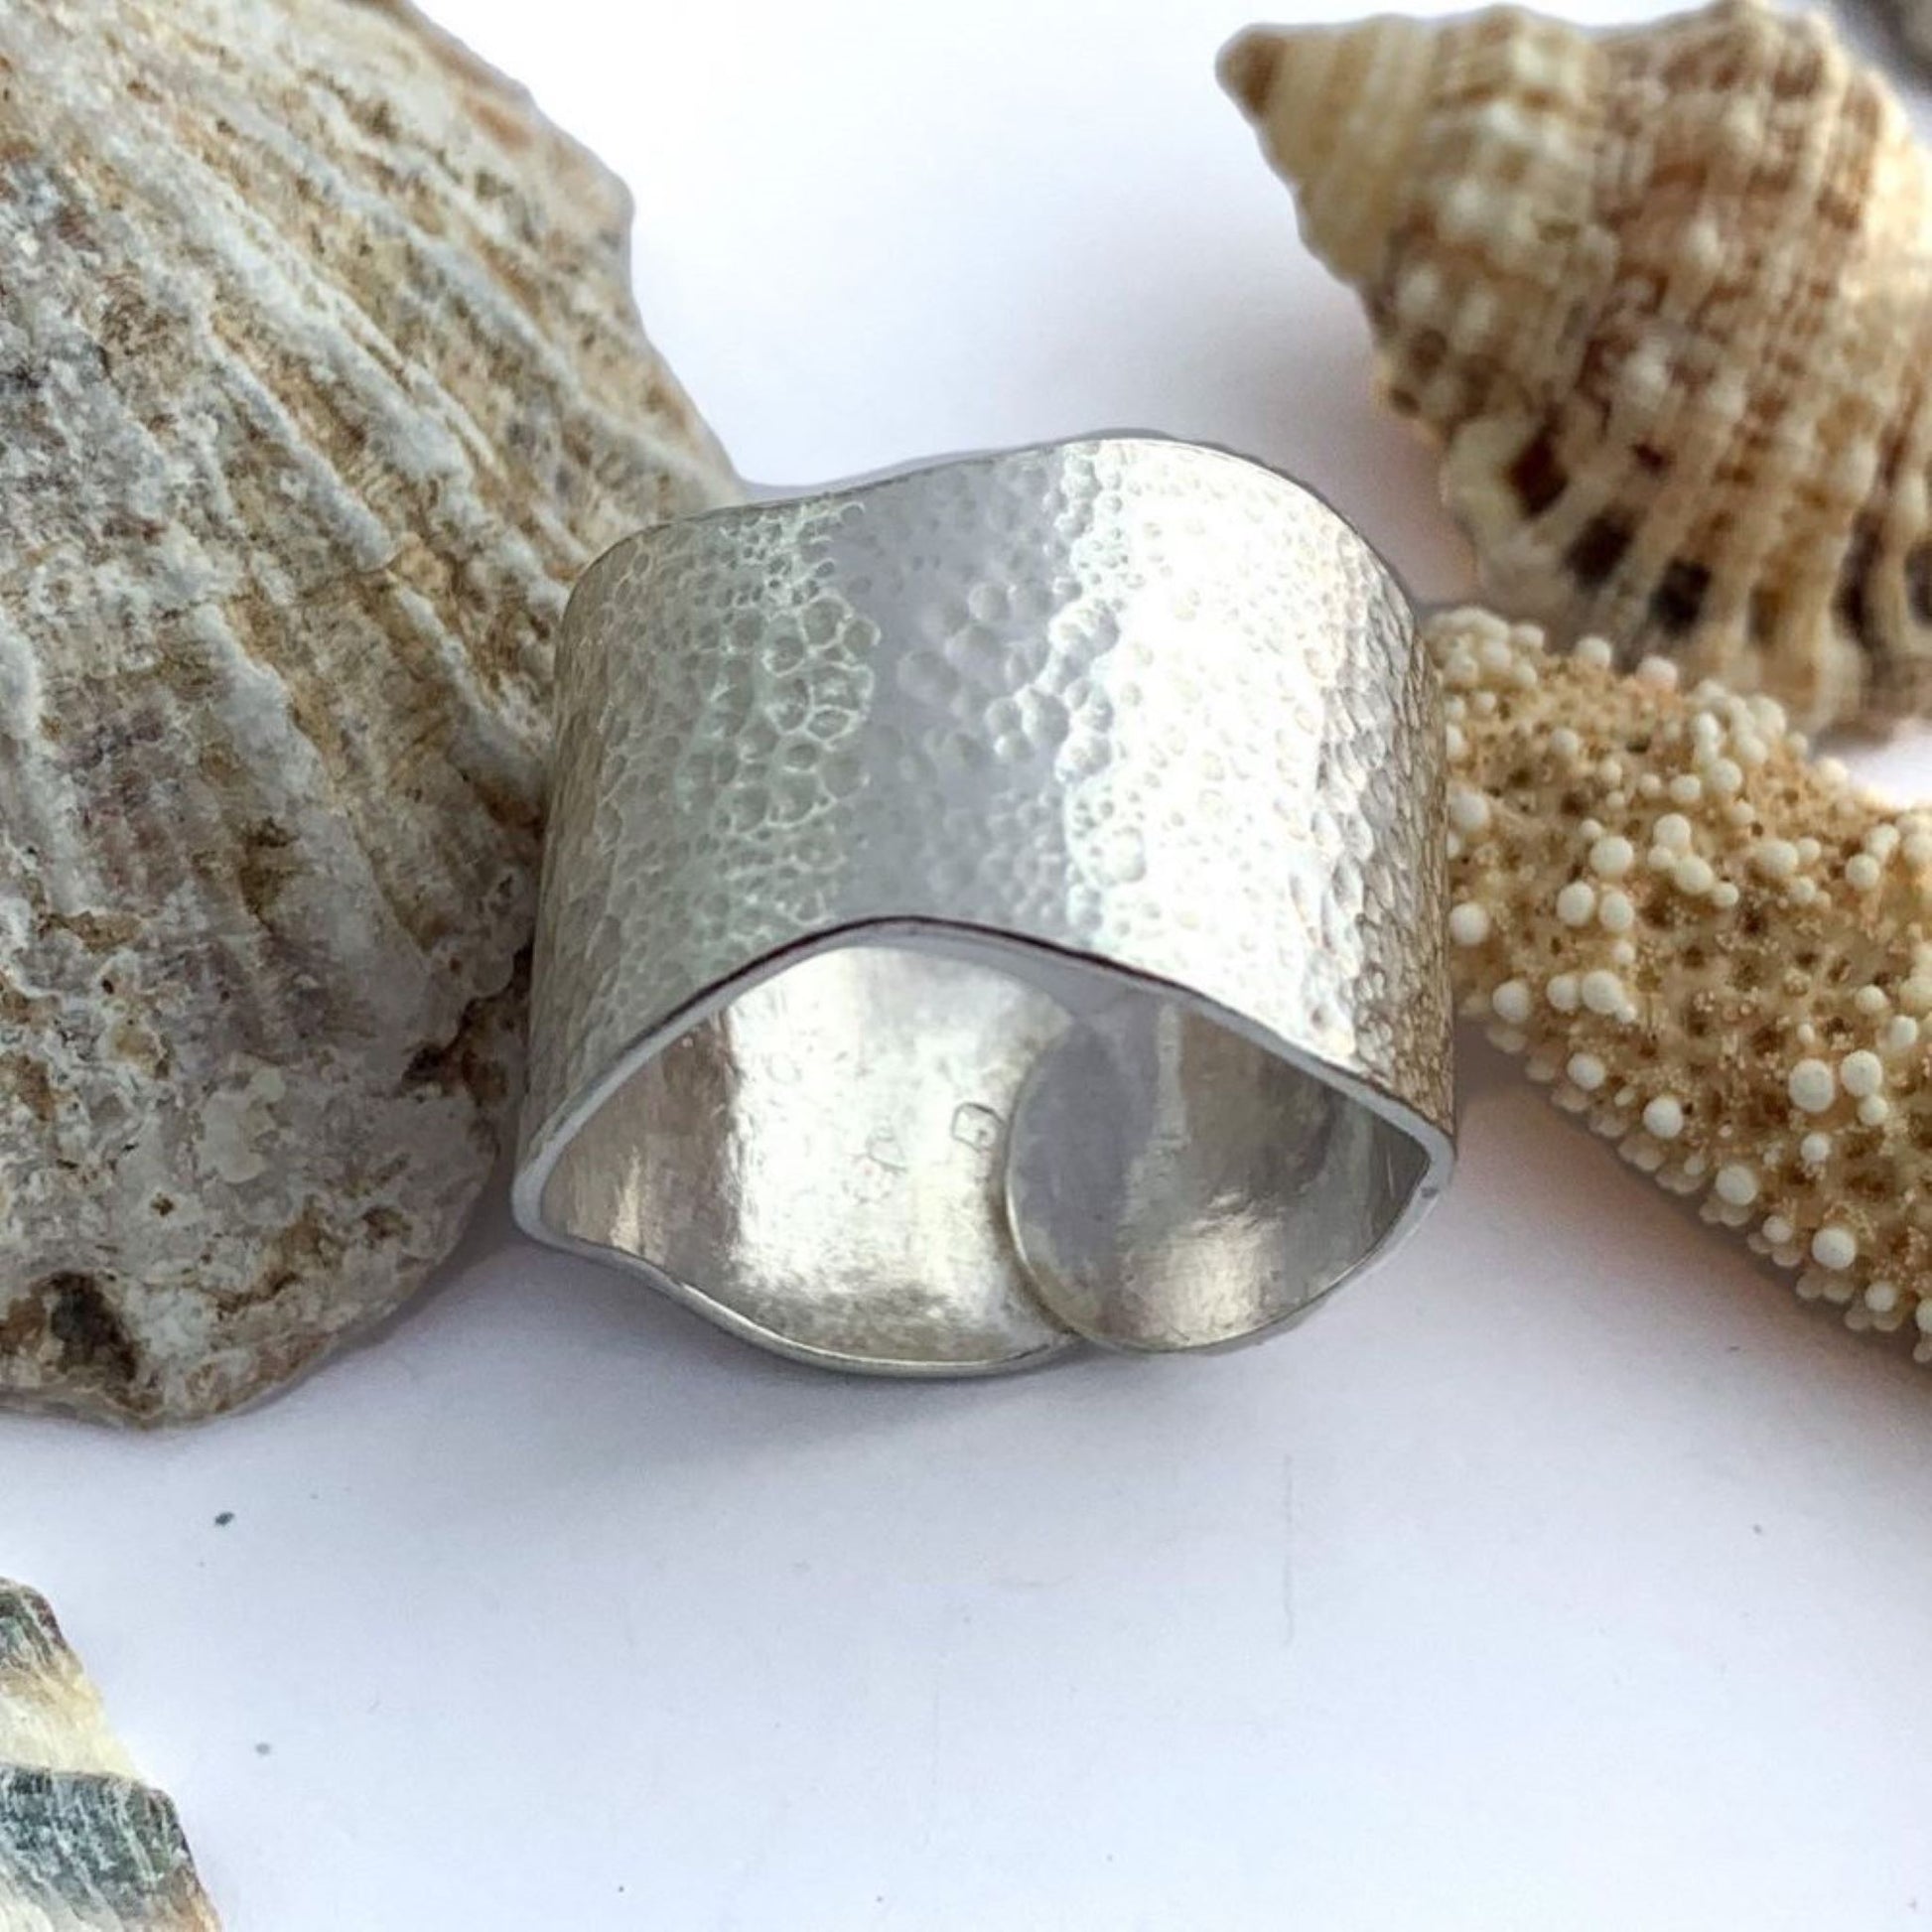 Sterling Silver Wave Design Ring